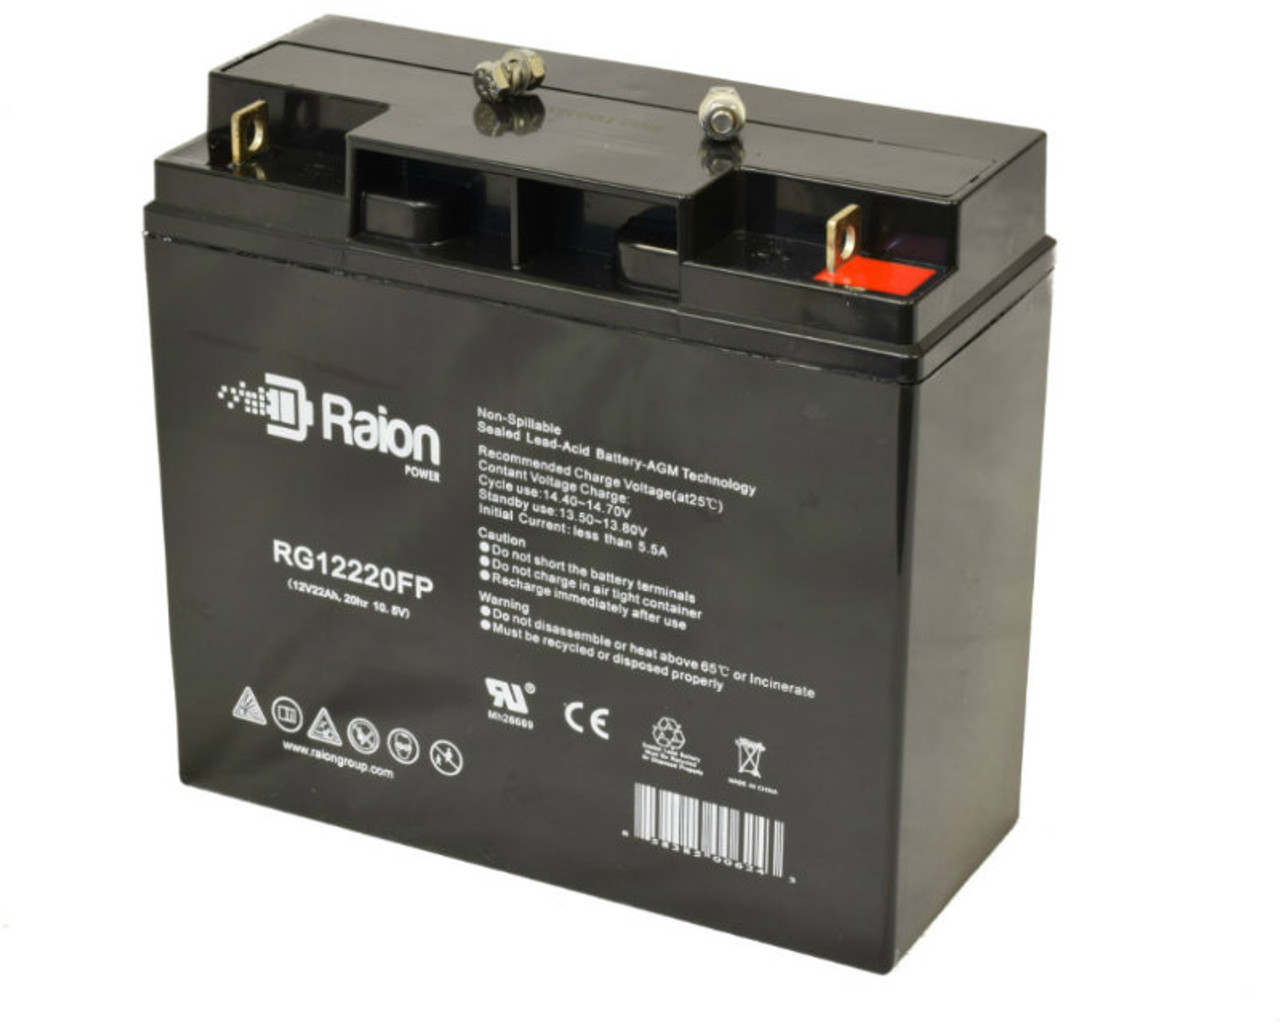 Raion Power RG12220FP 12V 22Ah Lead Acid Battery for Cal-Van Tools Cal 552 HDLX 12/24 Marine Jump Starter